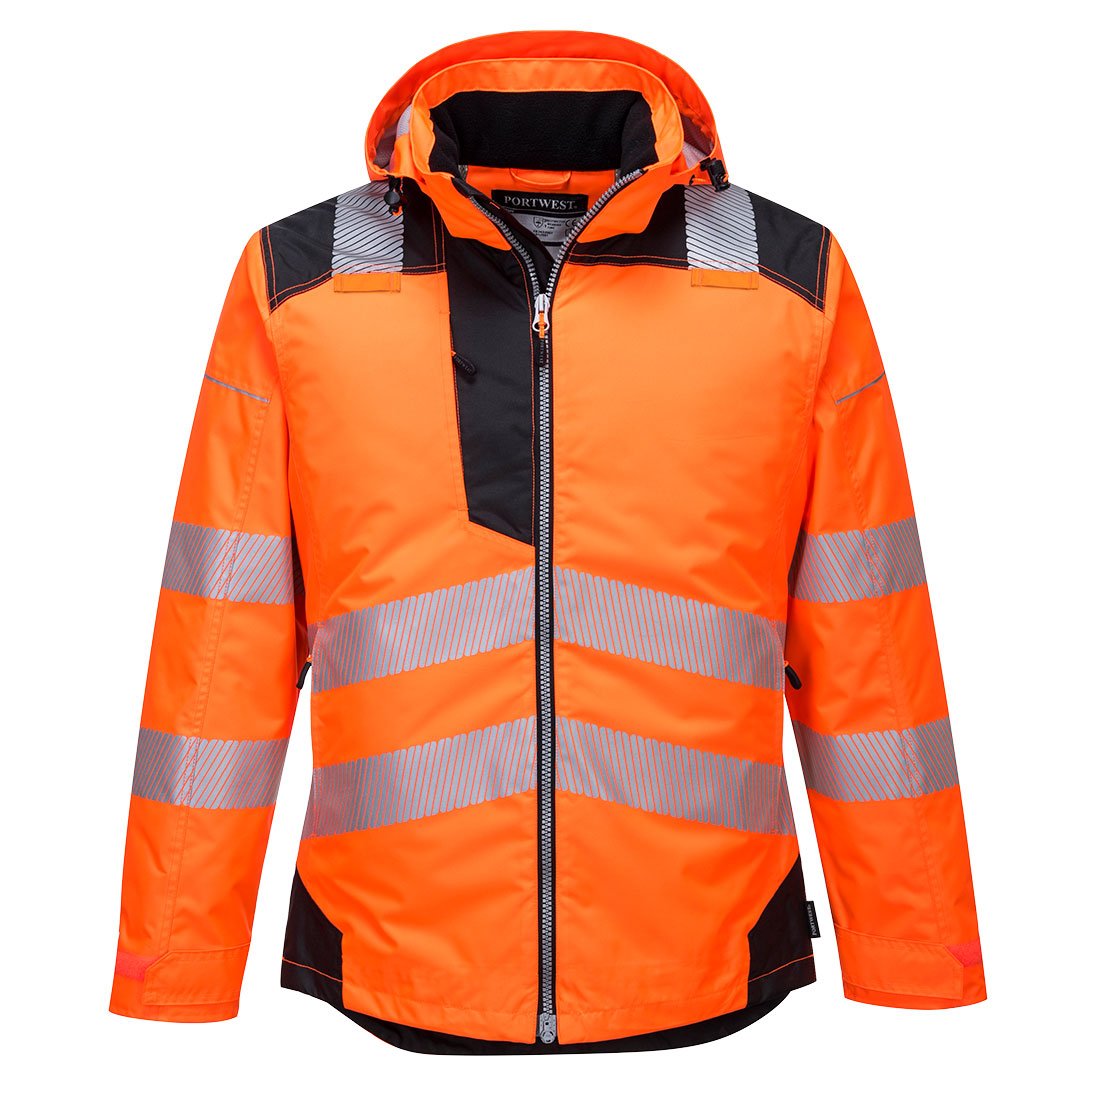 PW3 Hi-Vis Winter Jacket | Scaffolding Supplies Limited